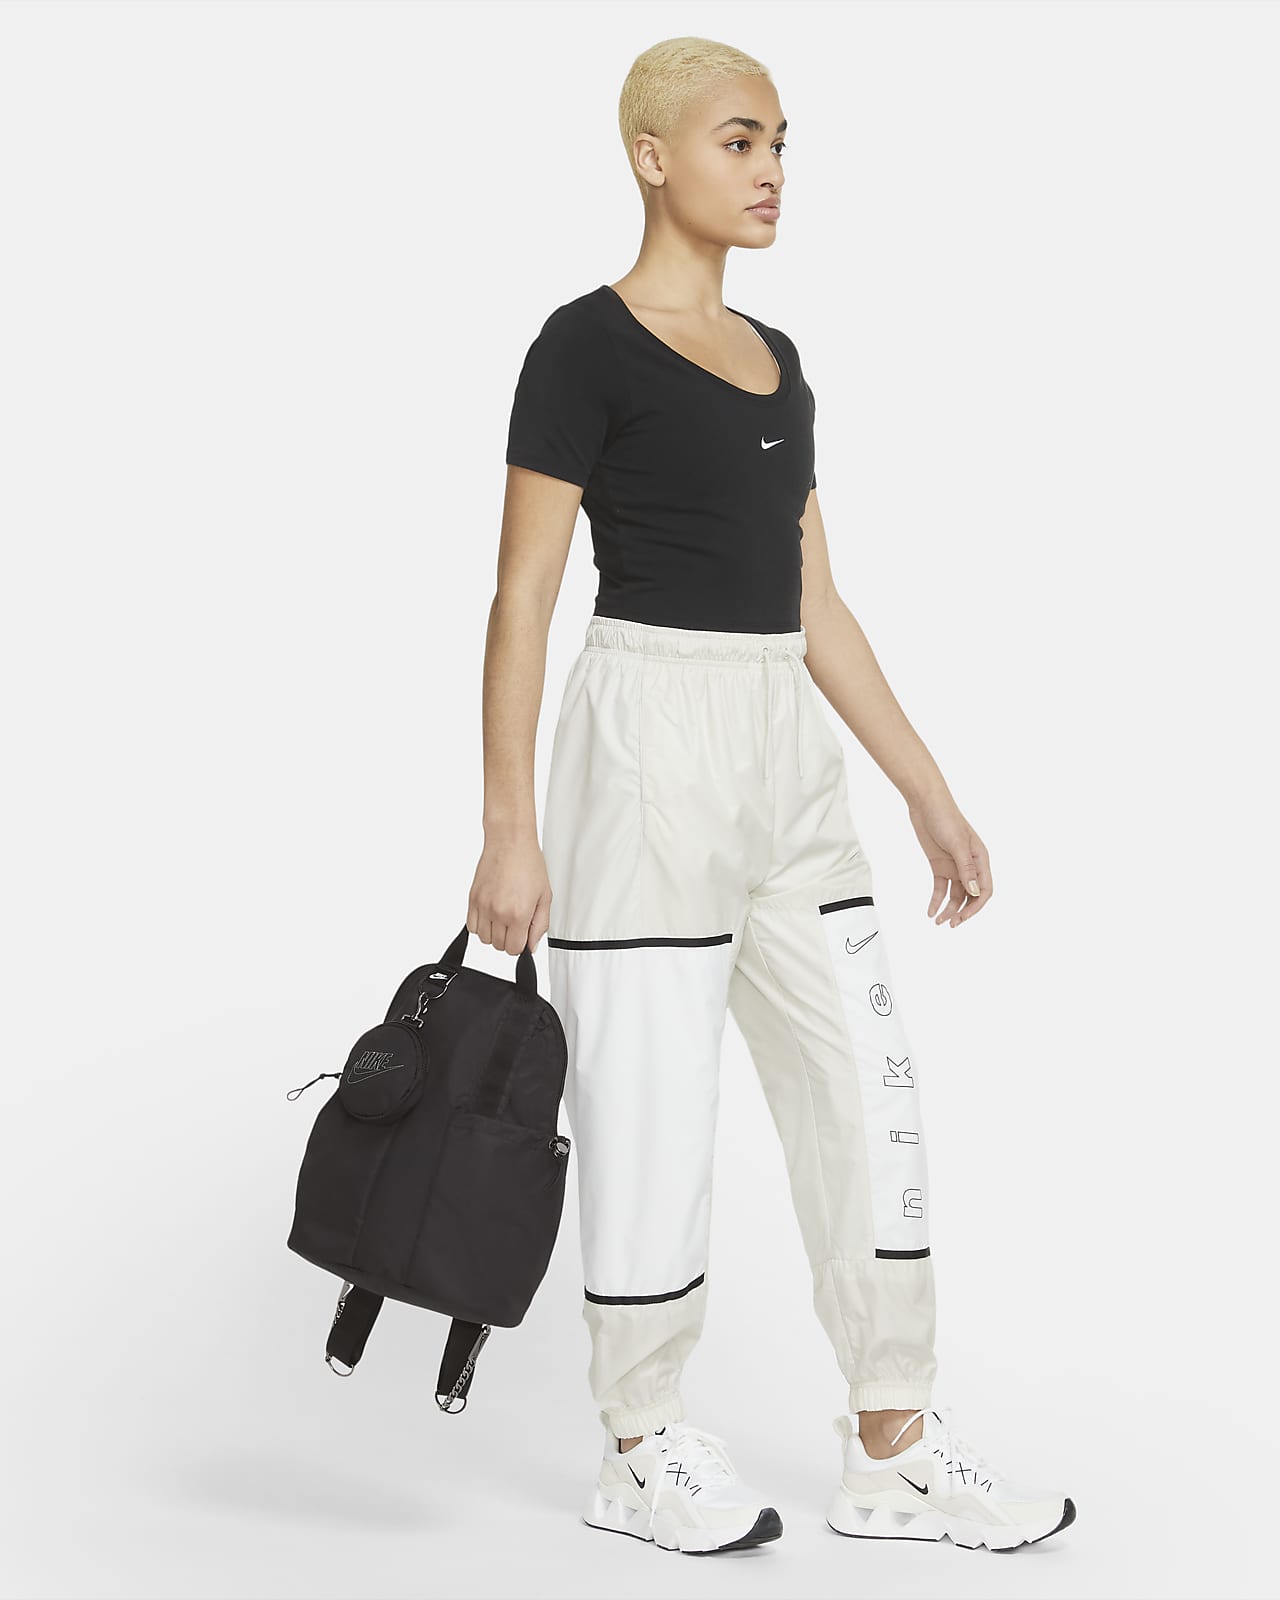 Handbags Nike Sportswear Futura Luxe • shop